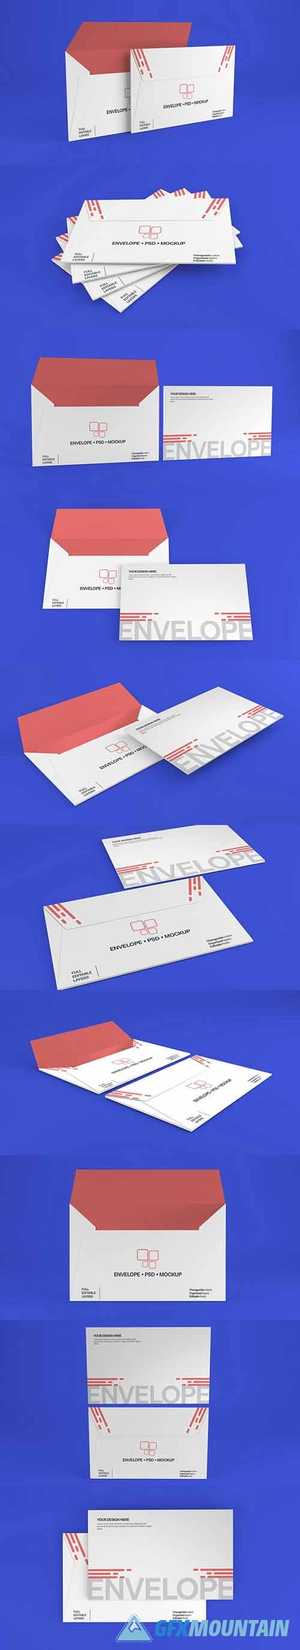 Realistic envelope mockup